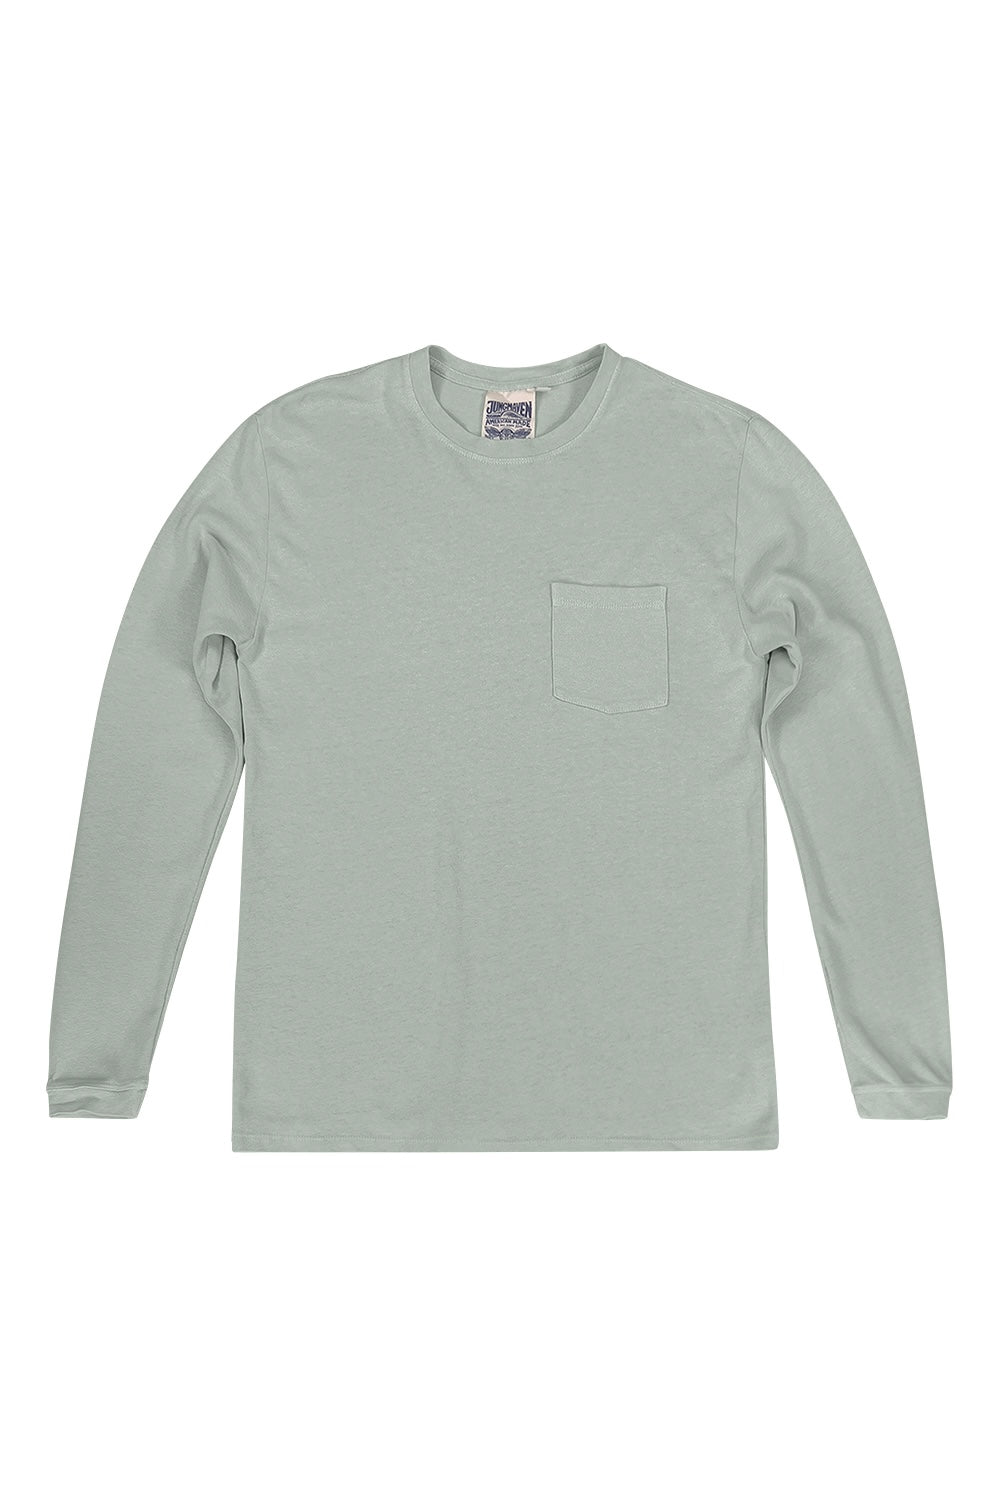 Baja Long Sleeve Pocket Tee | Jungmaven Hemp Clothing & Accessories / Color: Seafoam Green